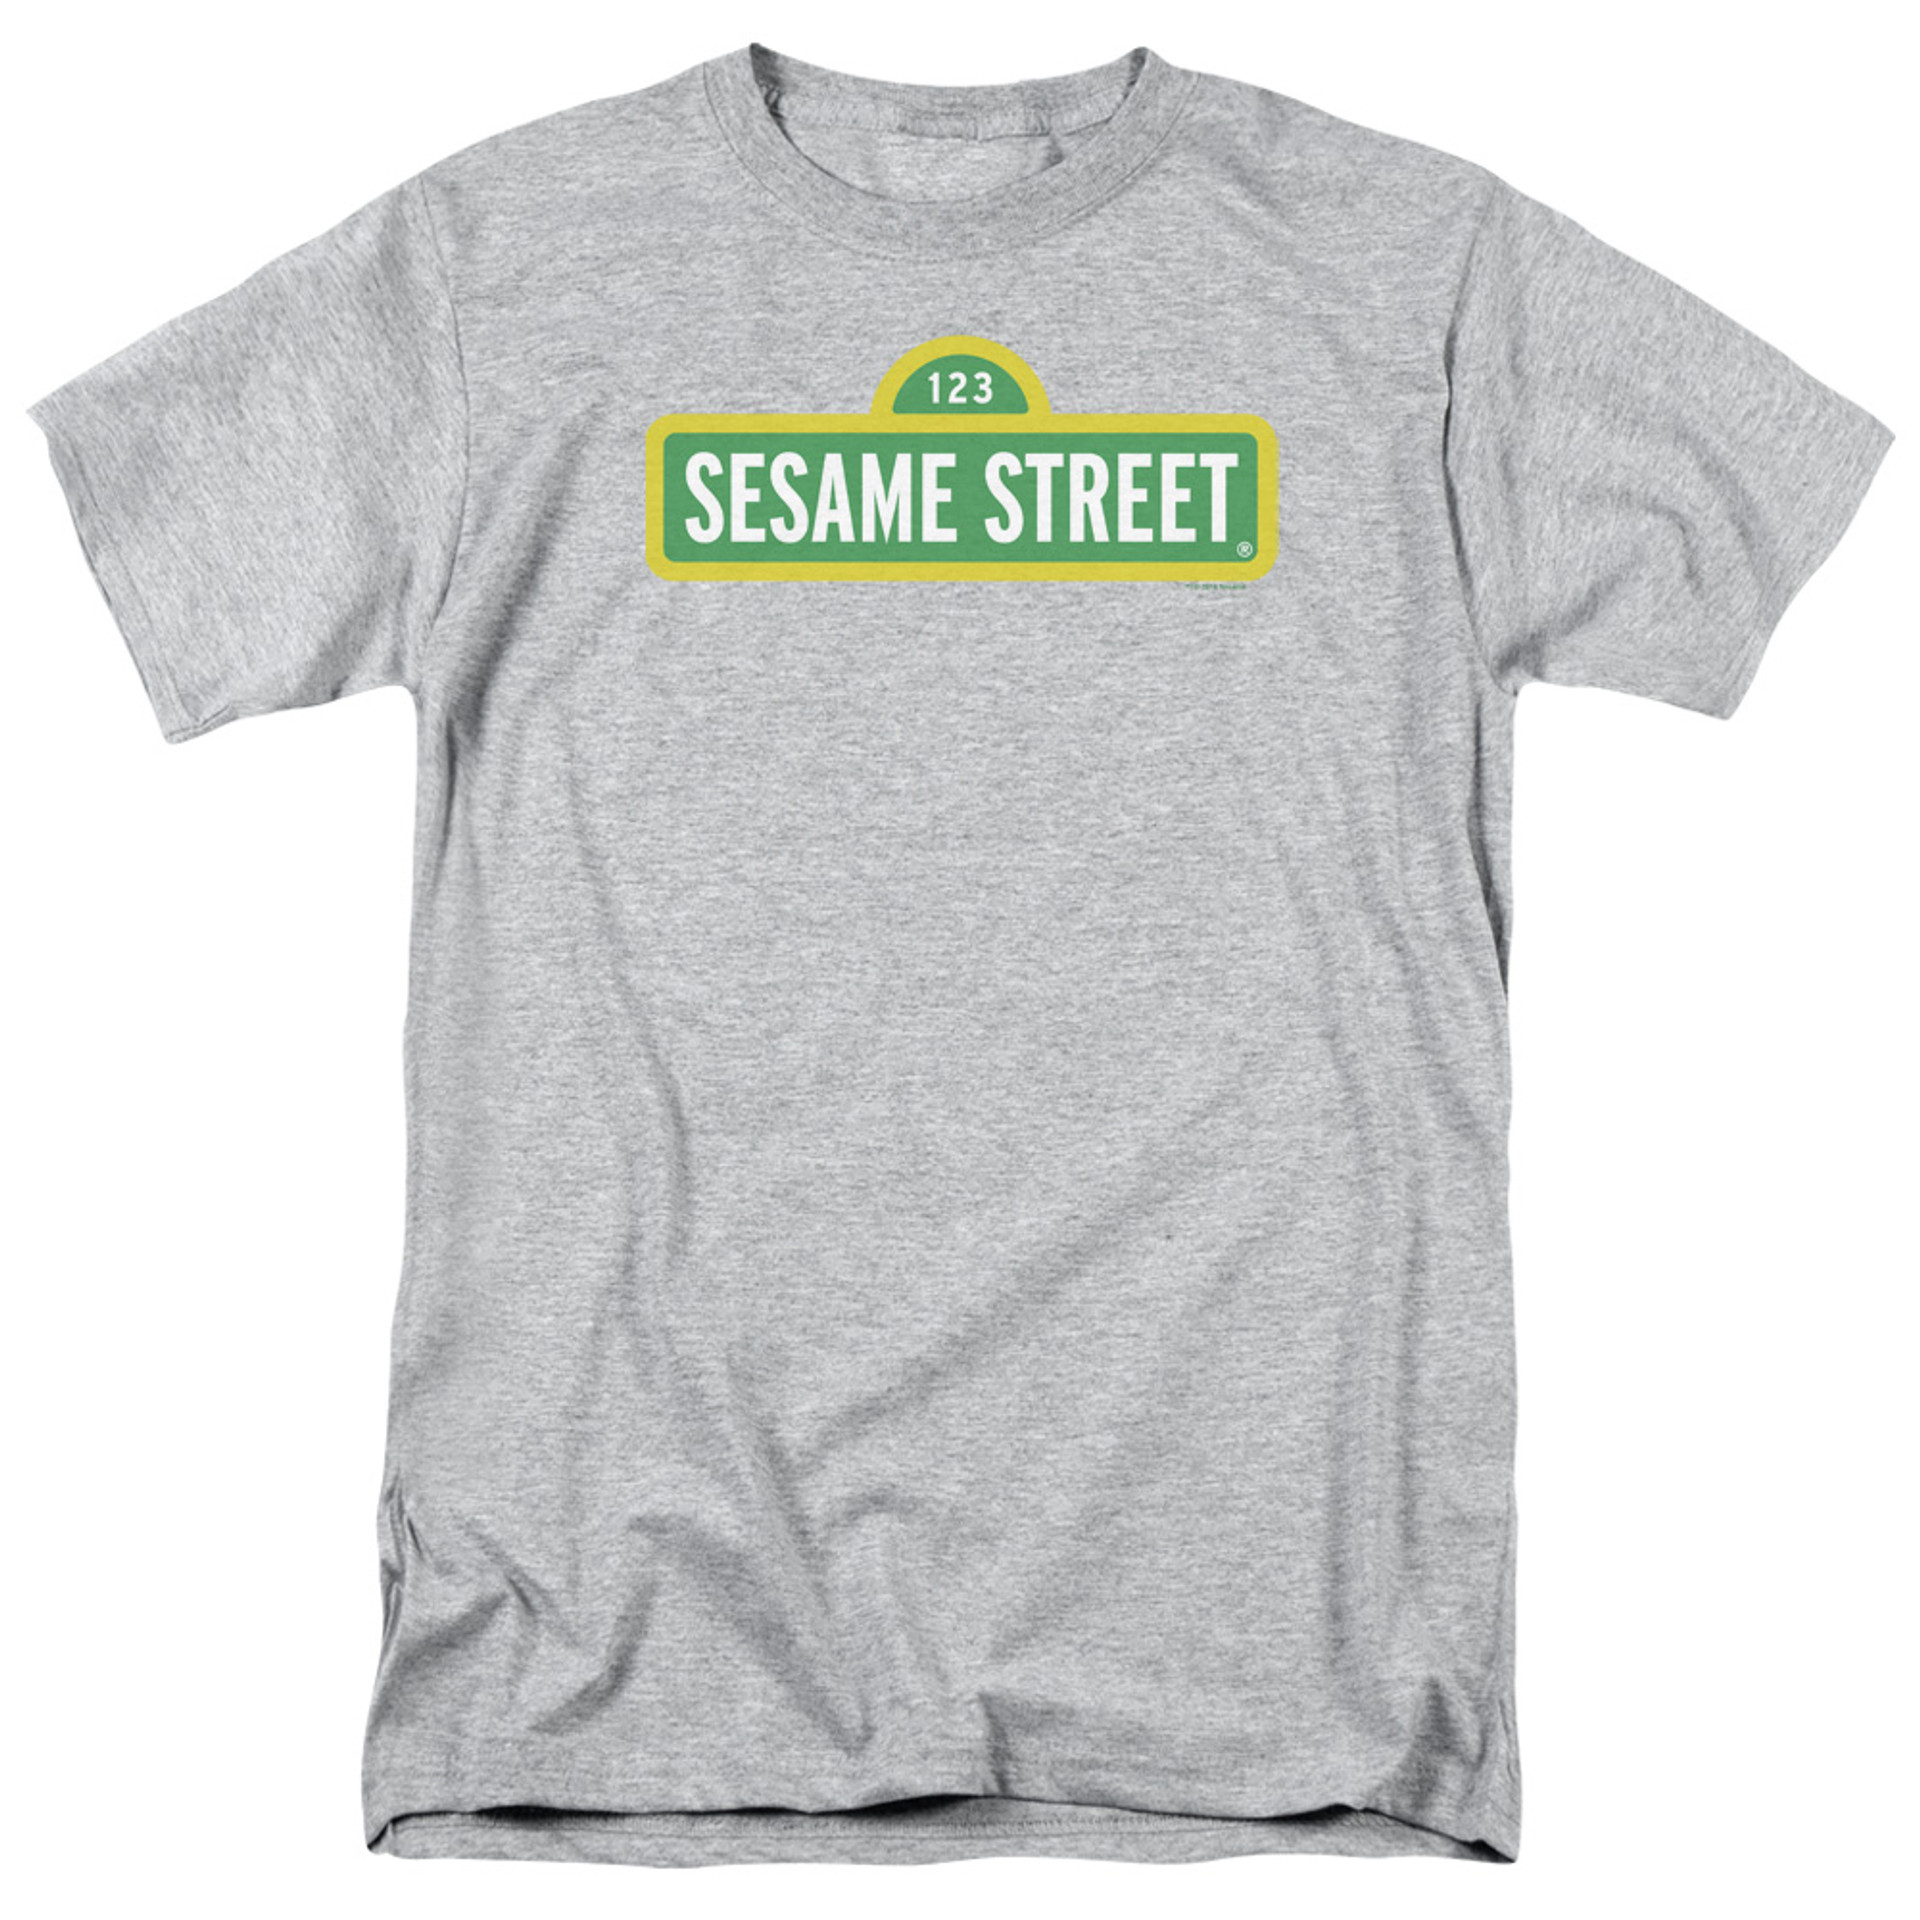 sesame street logo adult 181 t shirt athletic 3583 qaeq5